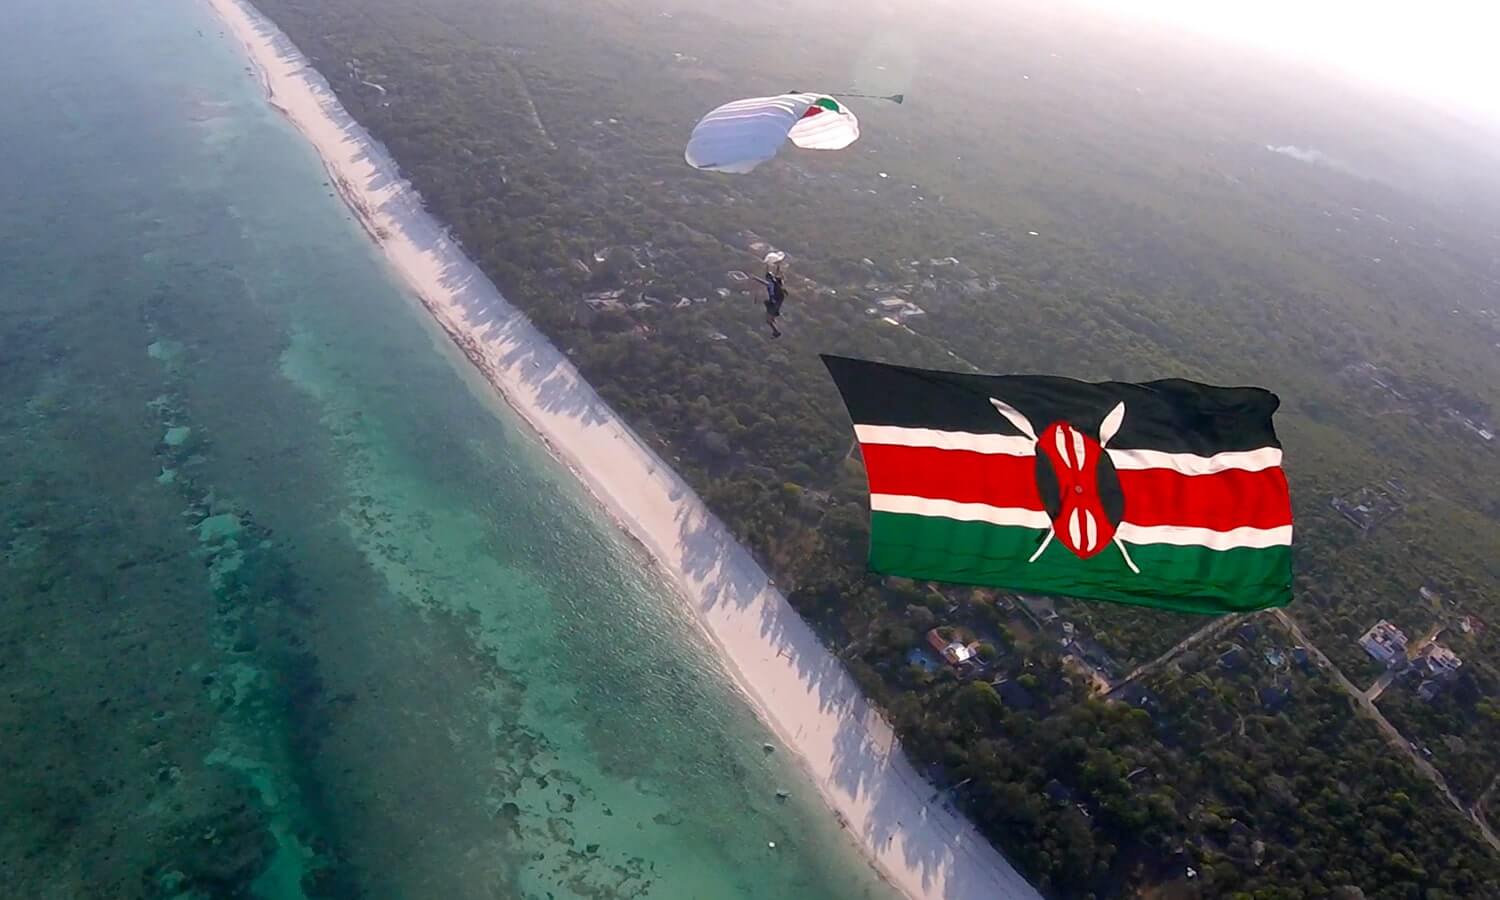 Skydiving Zanzibar